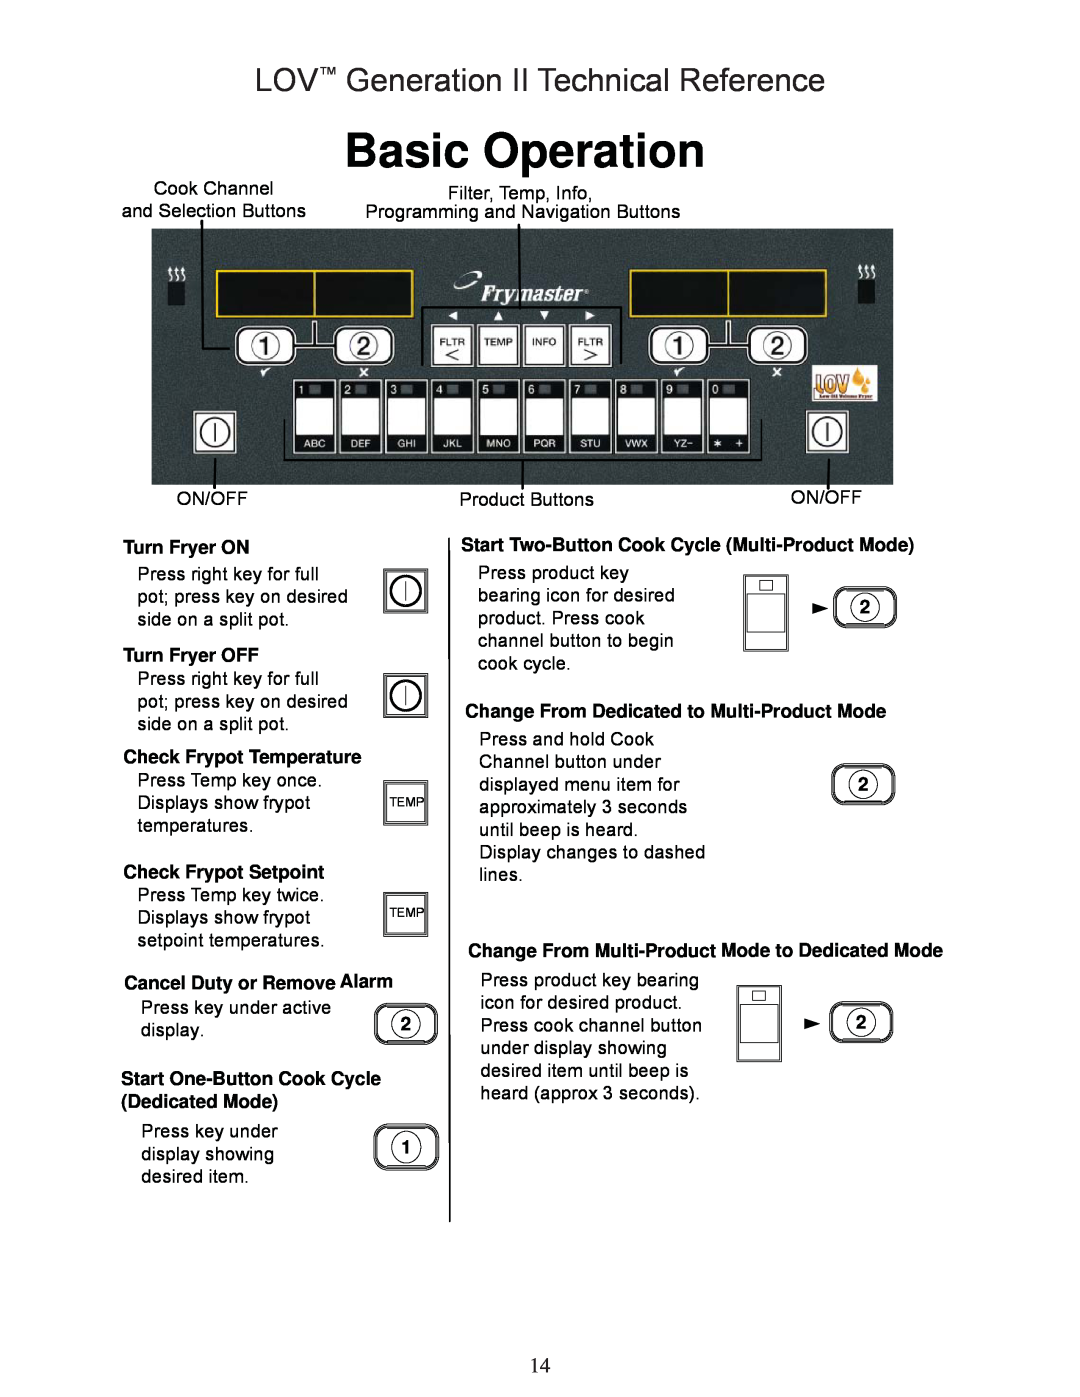 Frymaster M3000 manual Basic Operation, LOV Generation II Technical Reference 